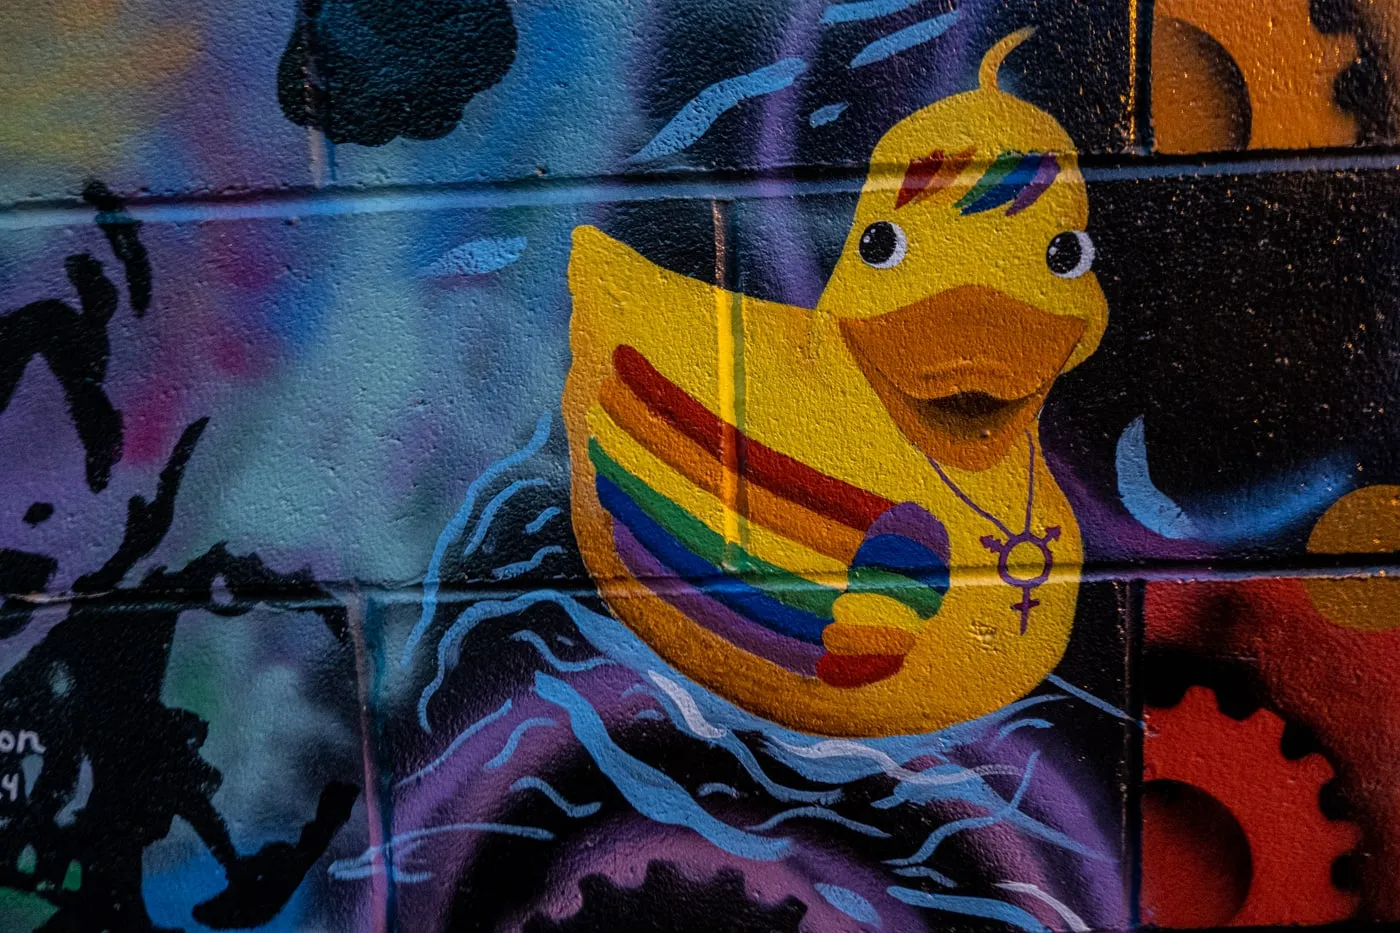 Detail of a rainbow-covered rubber duck. Alley 5.5: Bismarck Art Alley in North Dakota - Street art and Murals in Bismarck, North Dakota